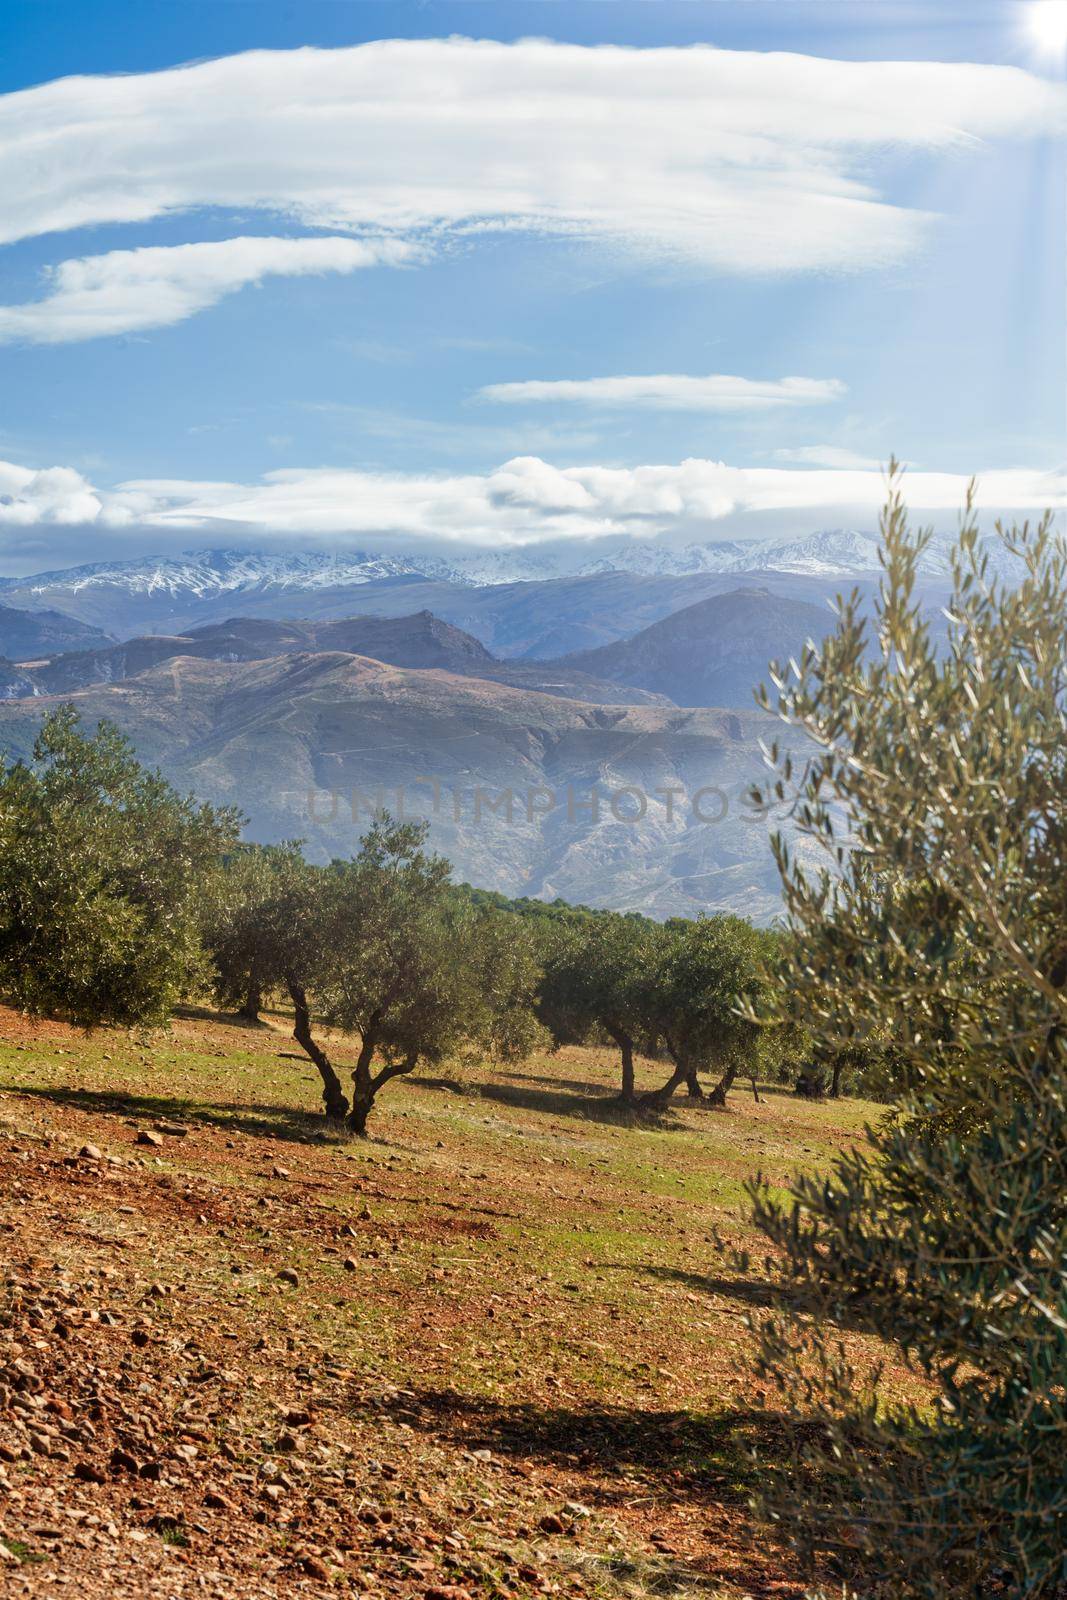 Sierra Nevada as seen from the olive groves in the Llano de la Perdiz in Granada, Andalusia, Spain.